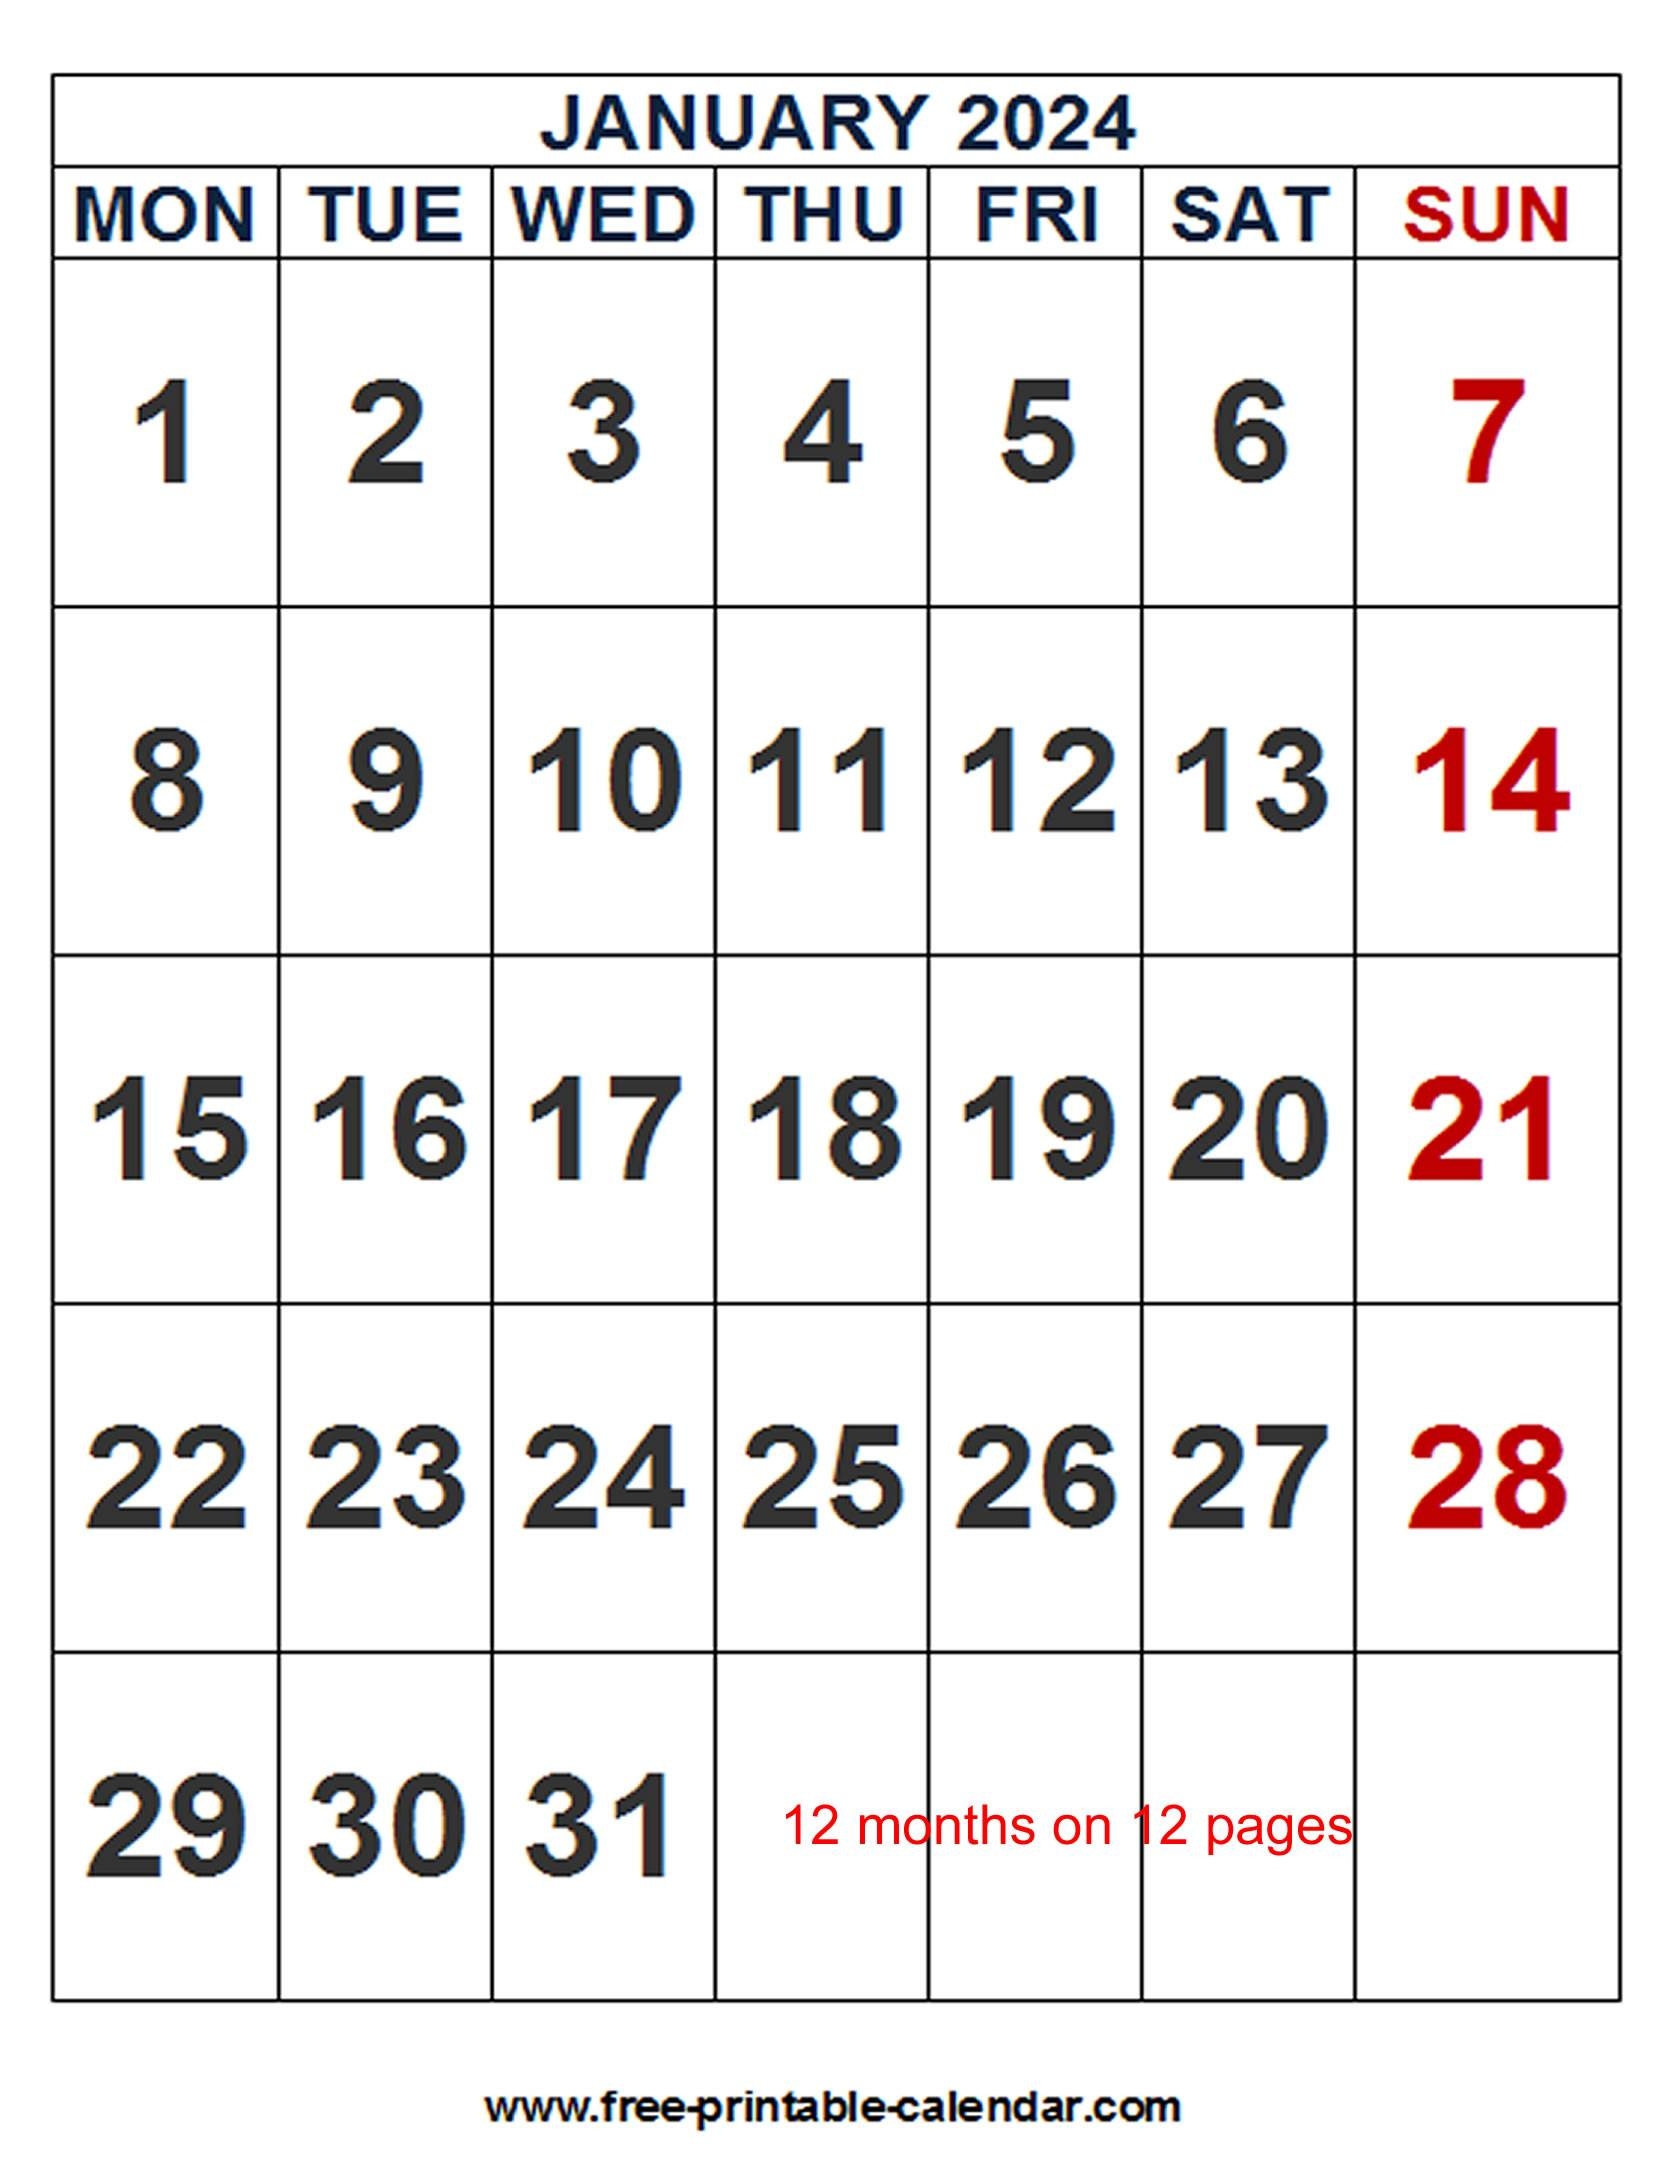 2024 Calendar Word Template - Free-Printable-Calendar pertaining to Free Printable Calendar 2024 Word Document